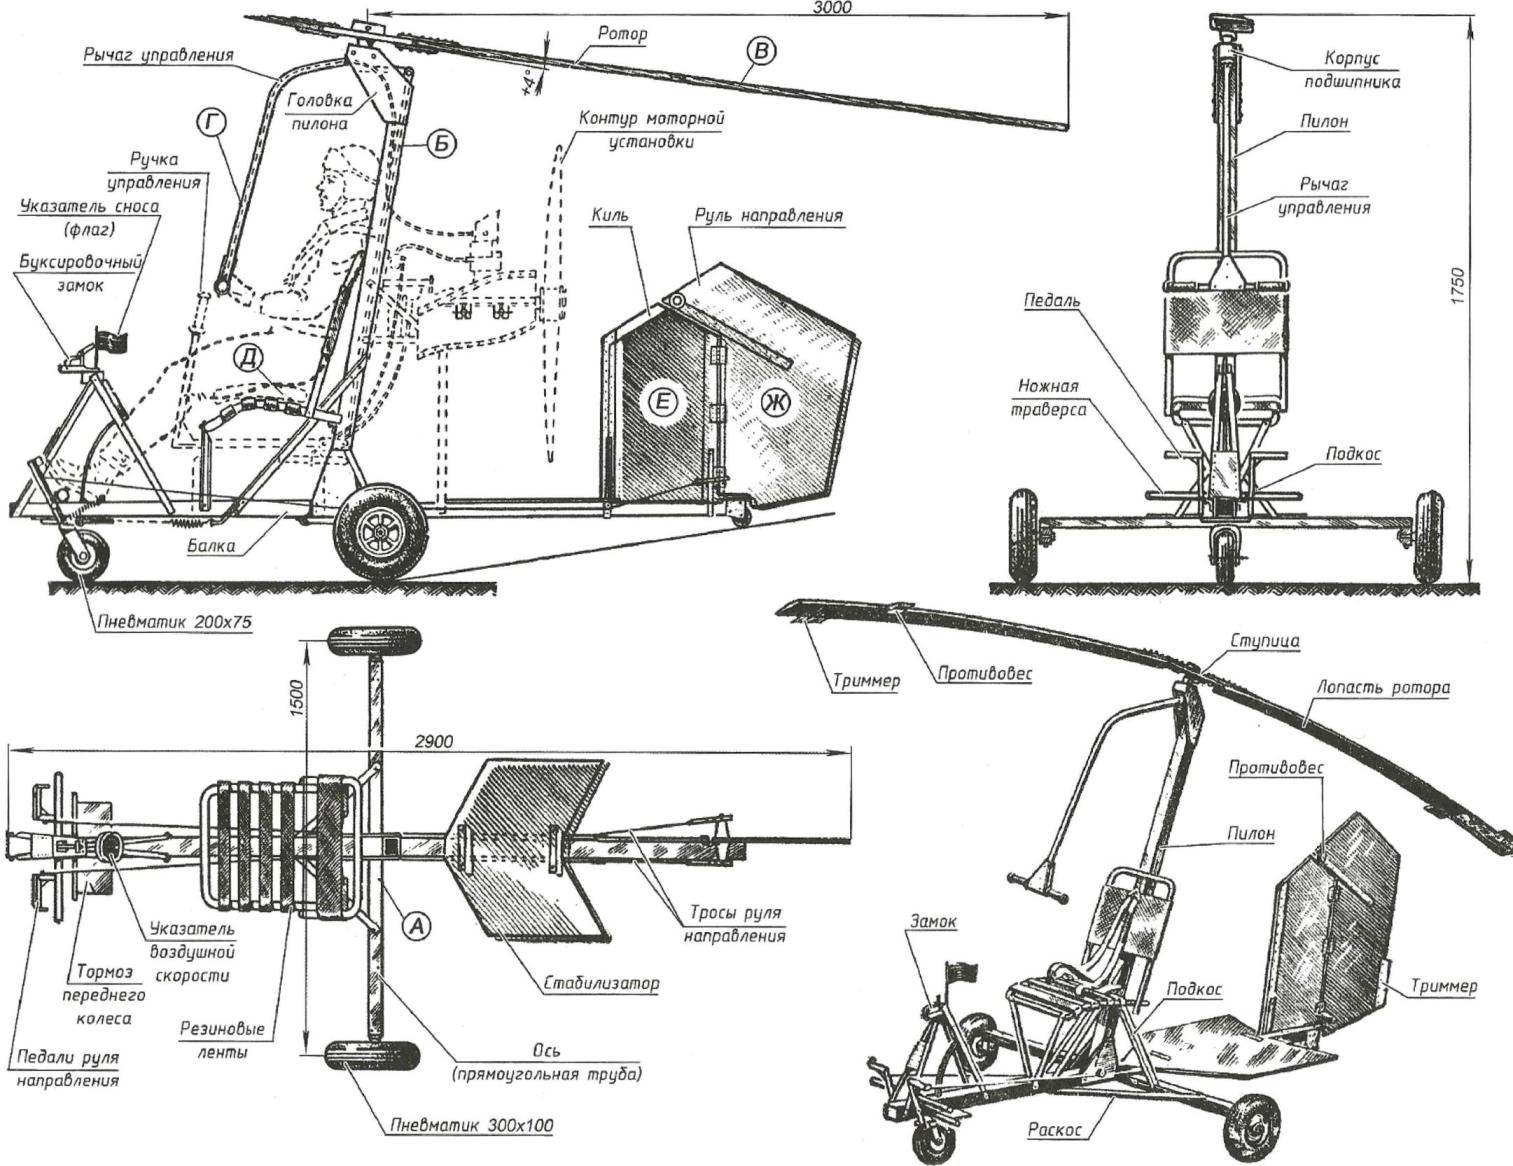 RU2659716C1 - Устройство сверхлегкого складного автожира - Google Patents